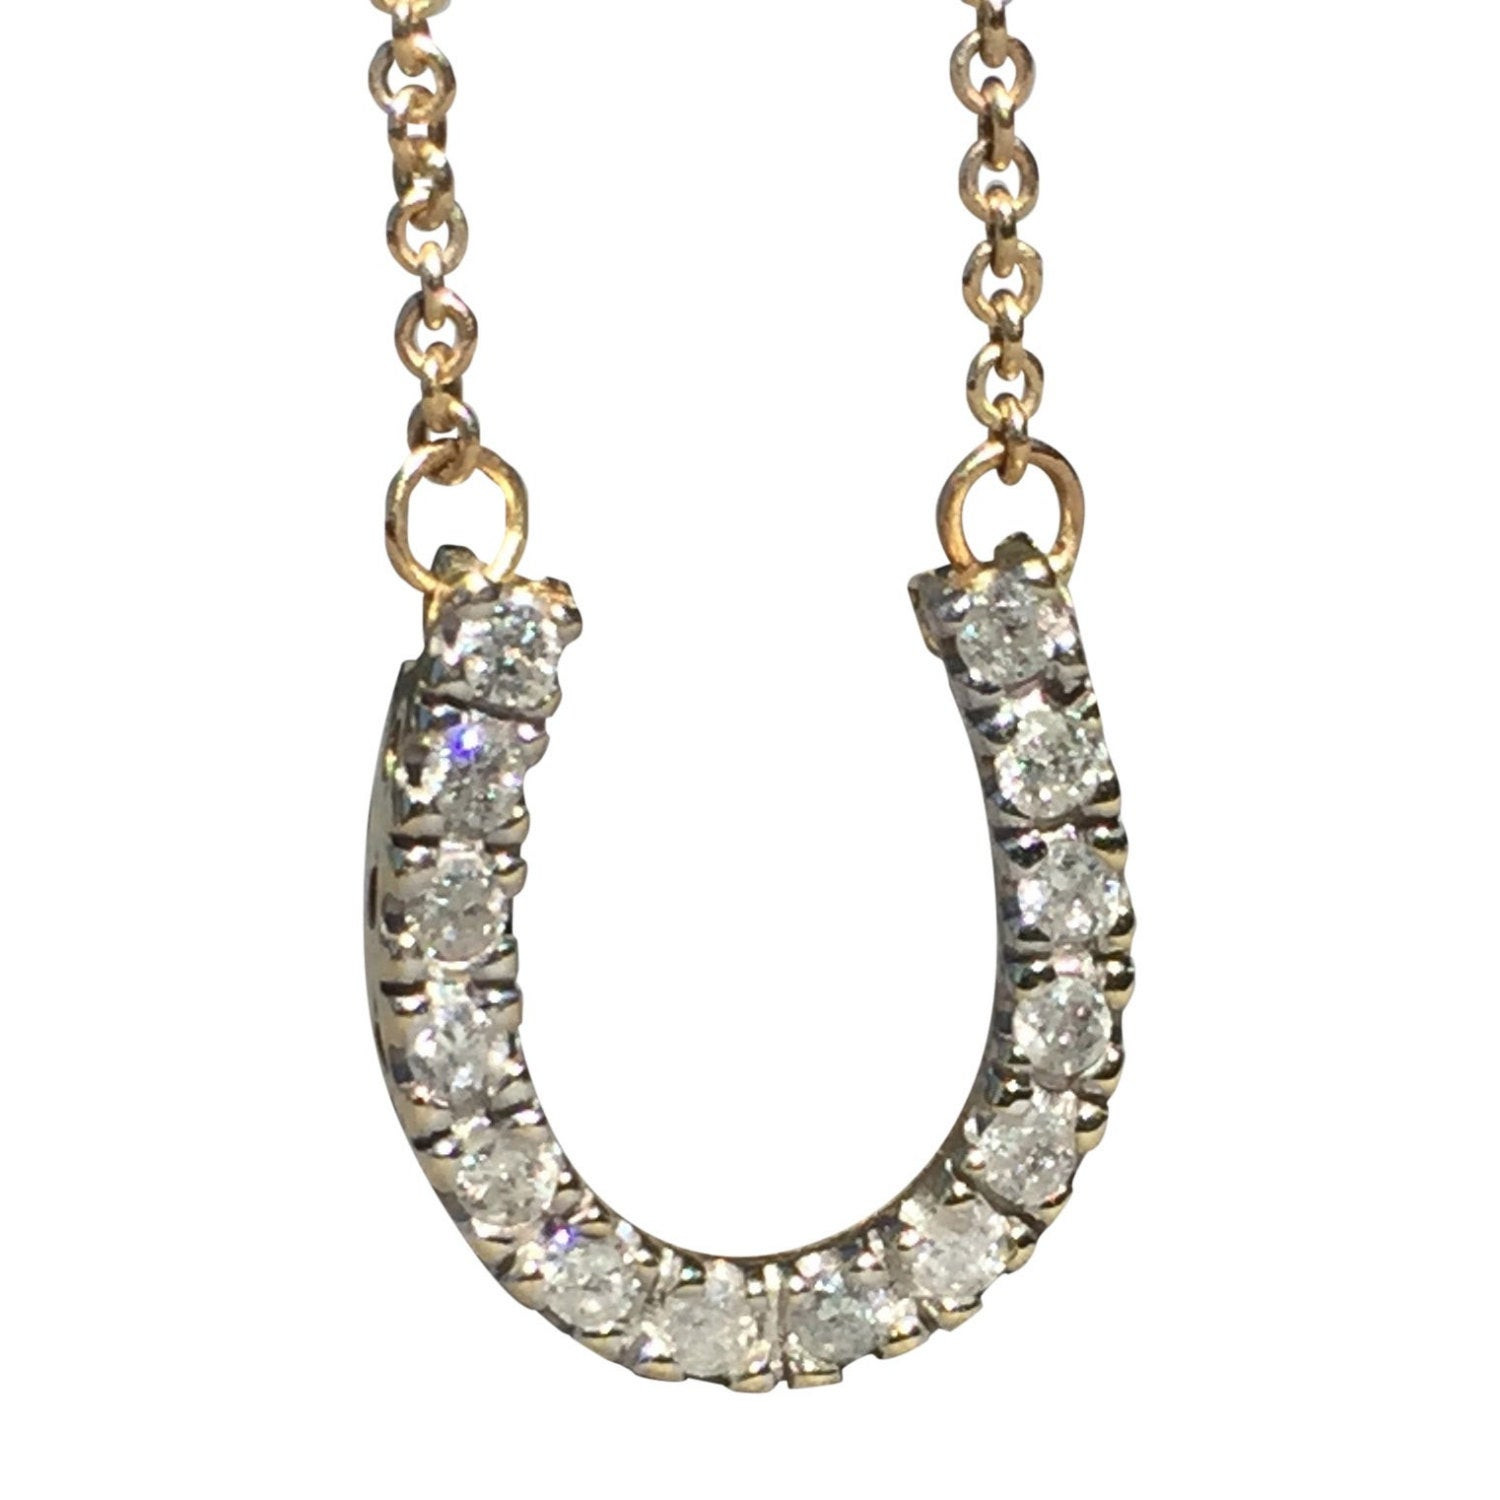 Diamond Horseshoe Necklace
 SALE Vintage Diamond Horseshoe Necklace in 10k Yellow Gold